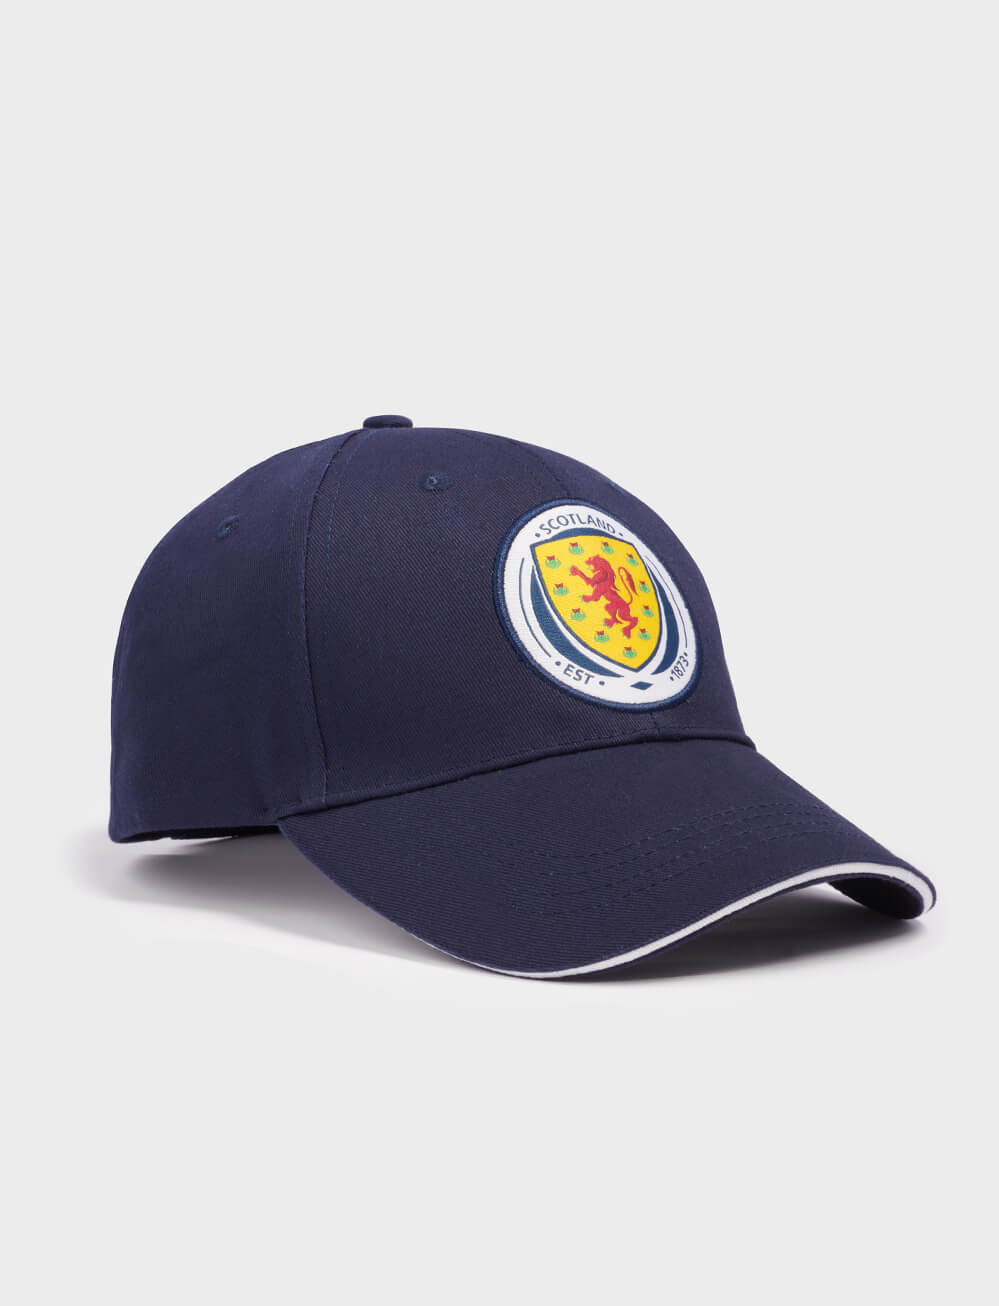 Official Team Scotland Cap - Blue - The World Football Store